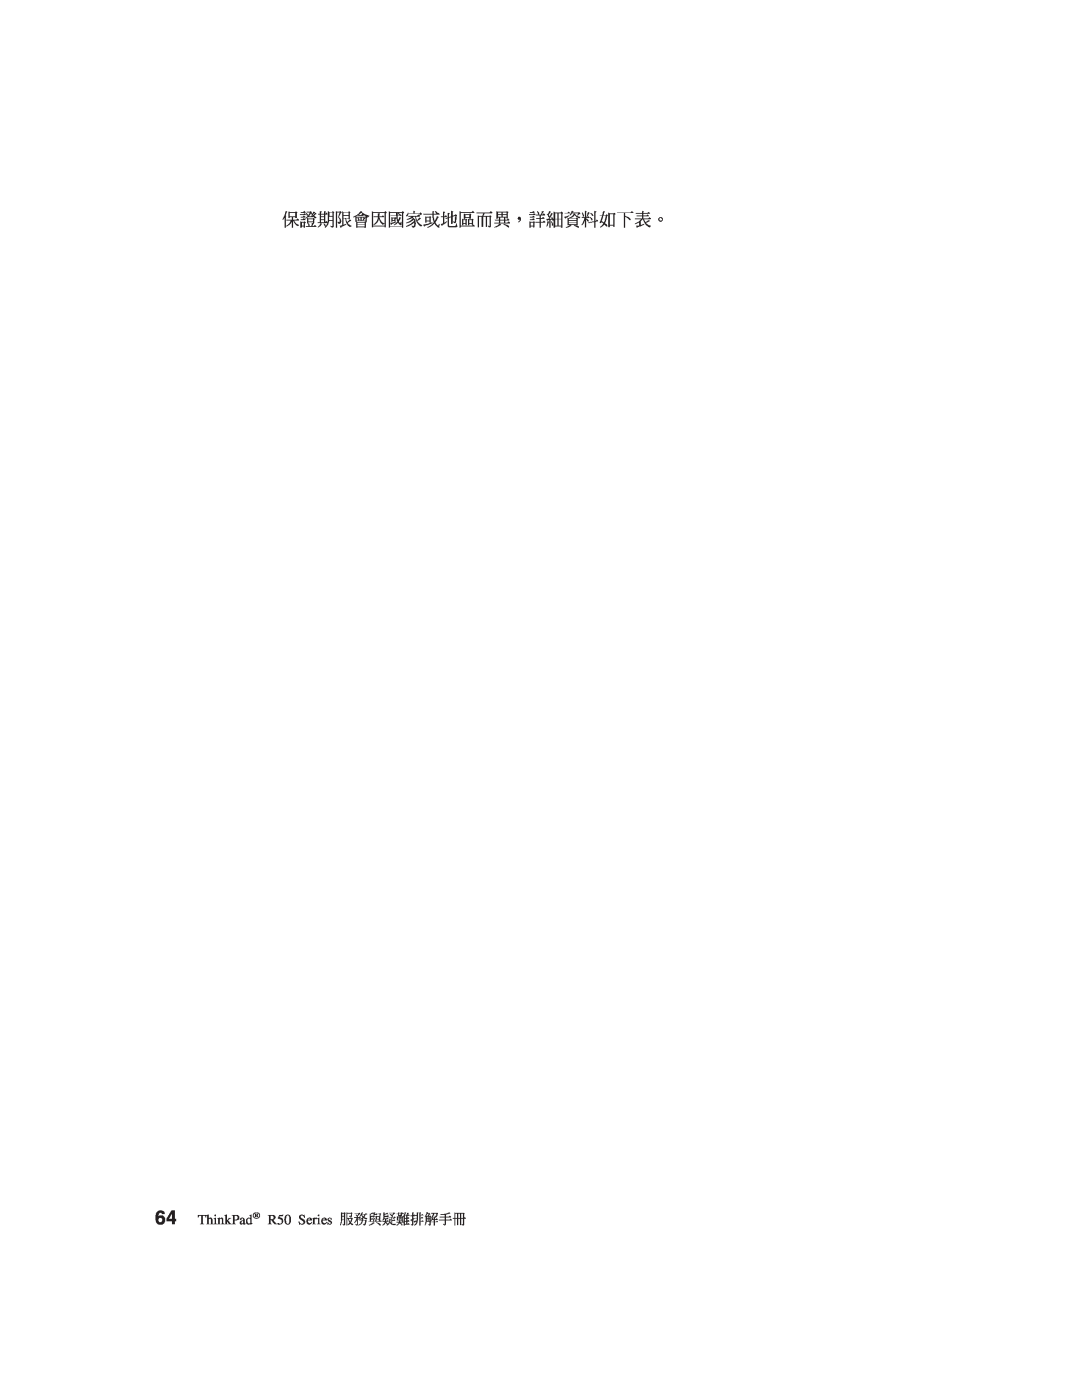 IBM manual O ¡ Ωa a ºA Ω pUϕC, ThinkPad R50 Series A P ΓU 